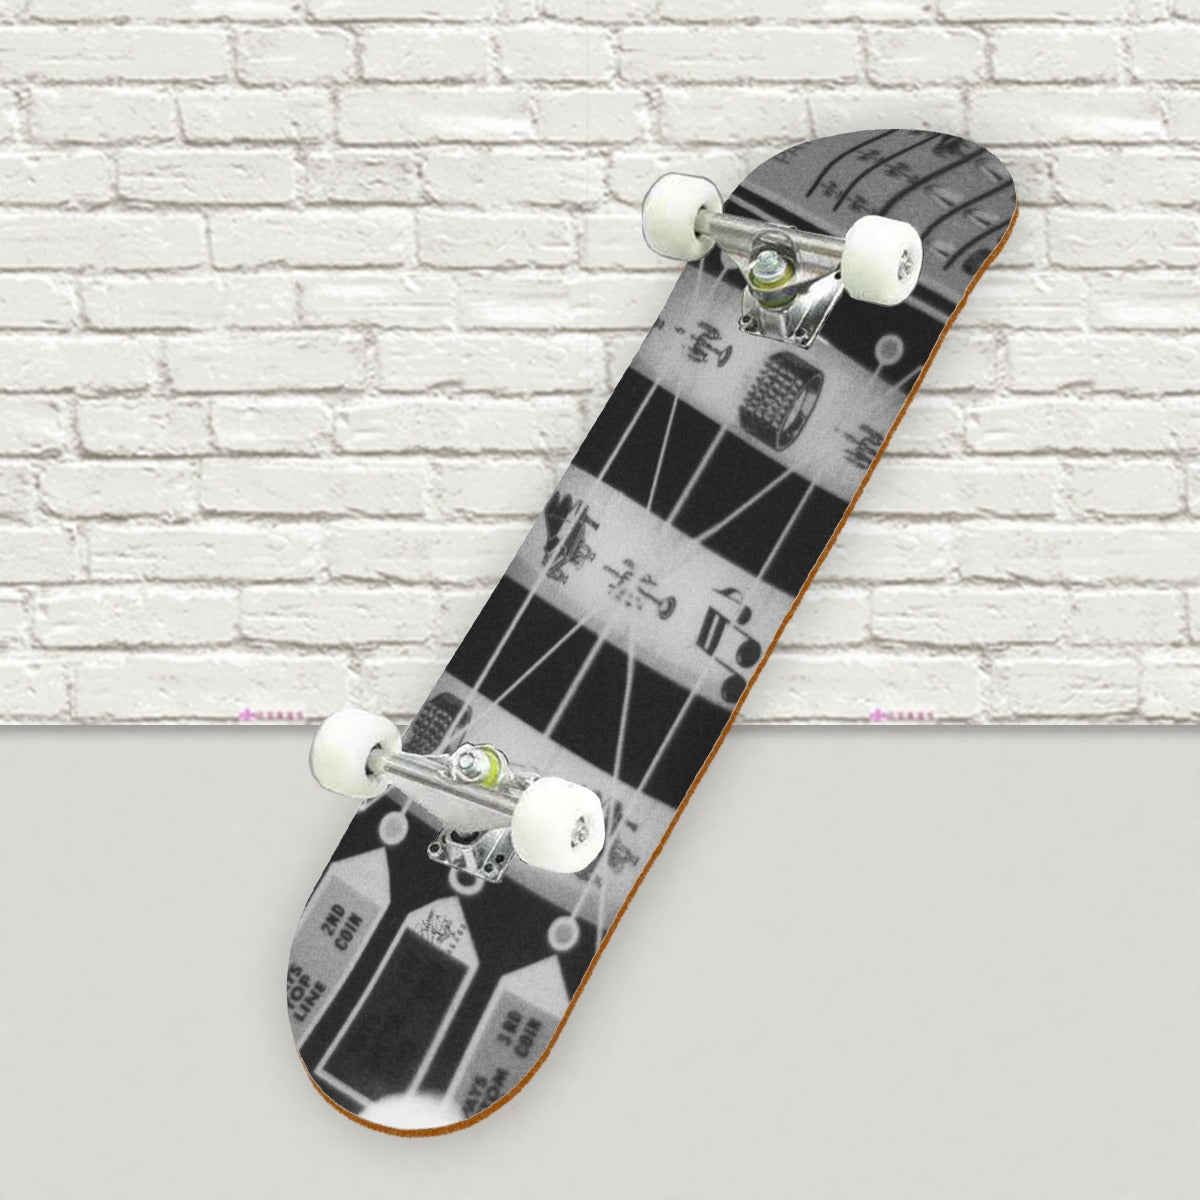 Liberace slot machine reels skateboard stickerback